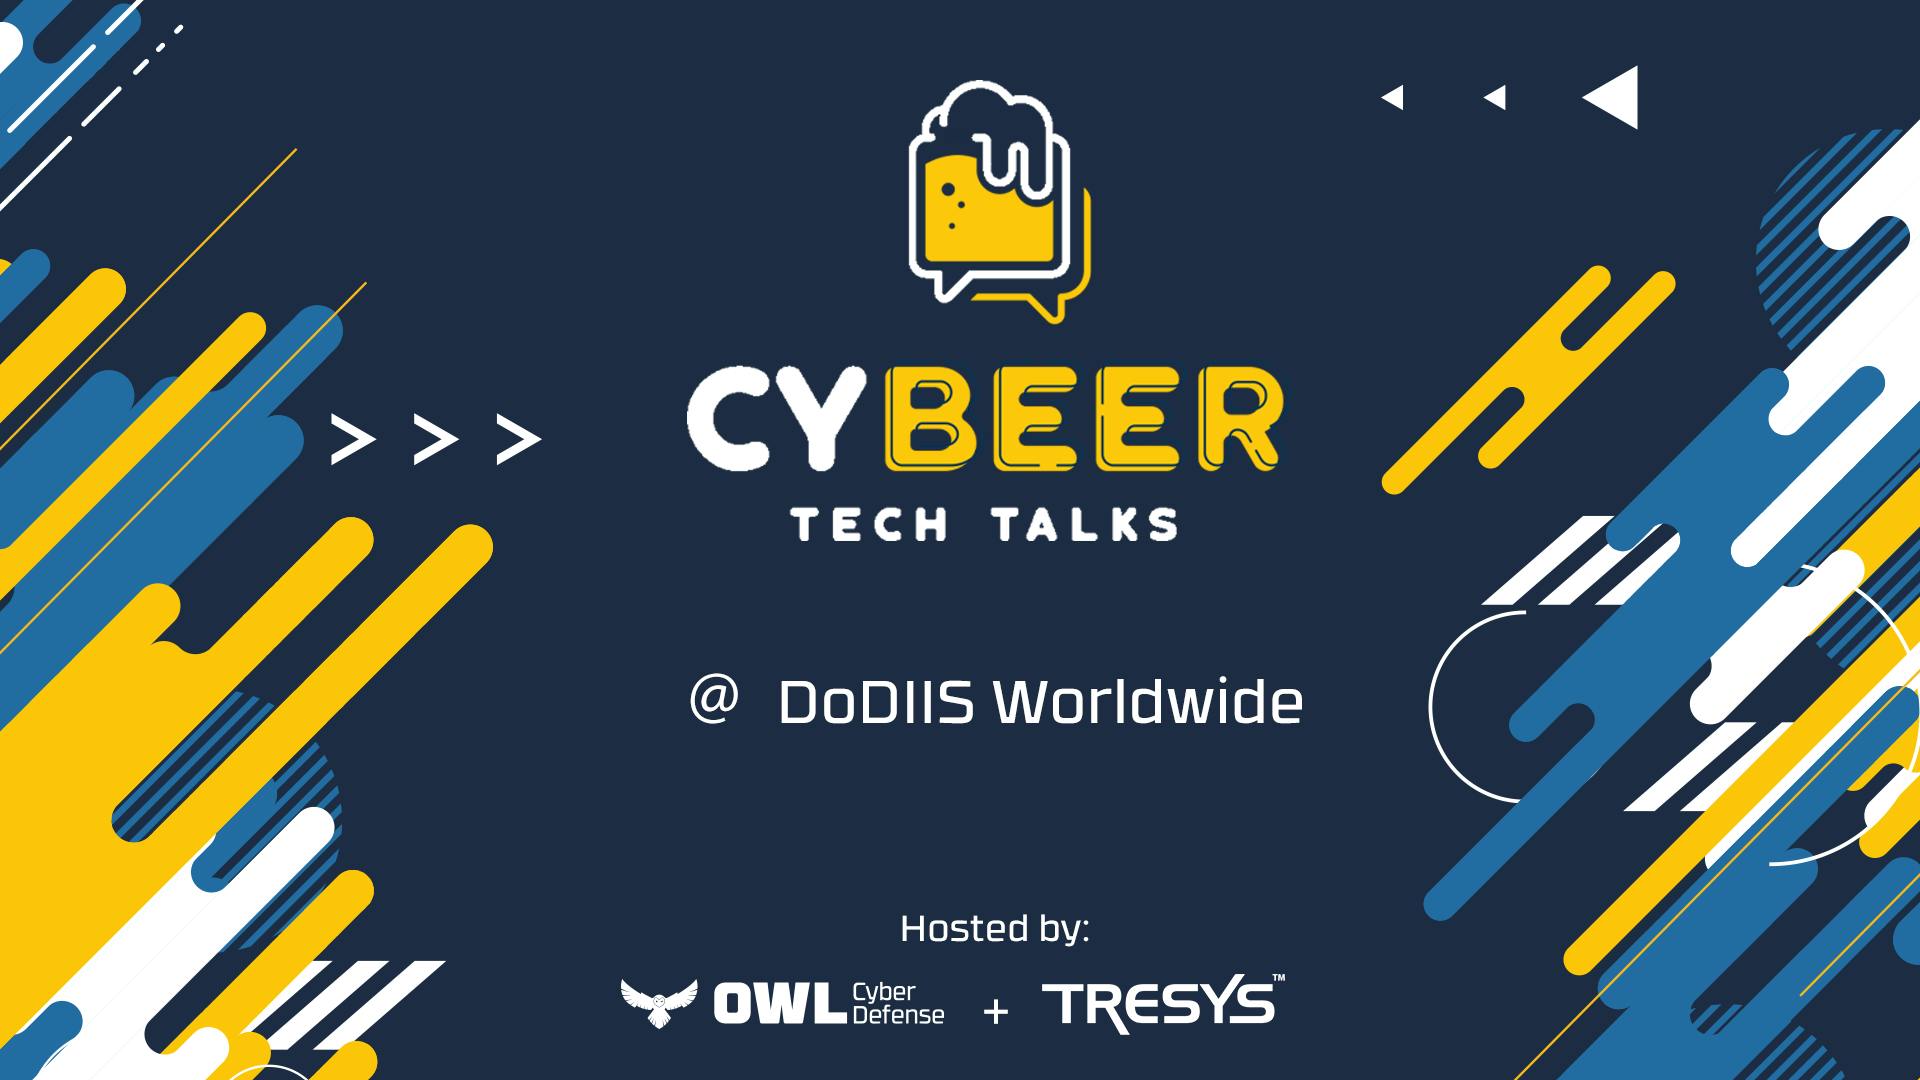 CyBeer Tech Talks at DoDIIS